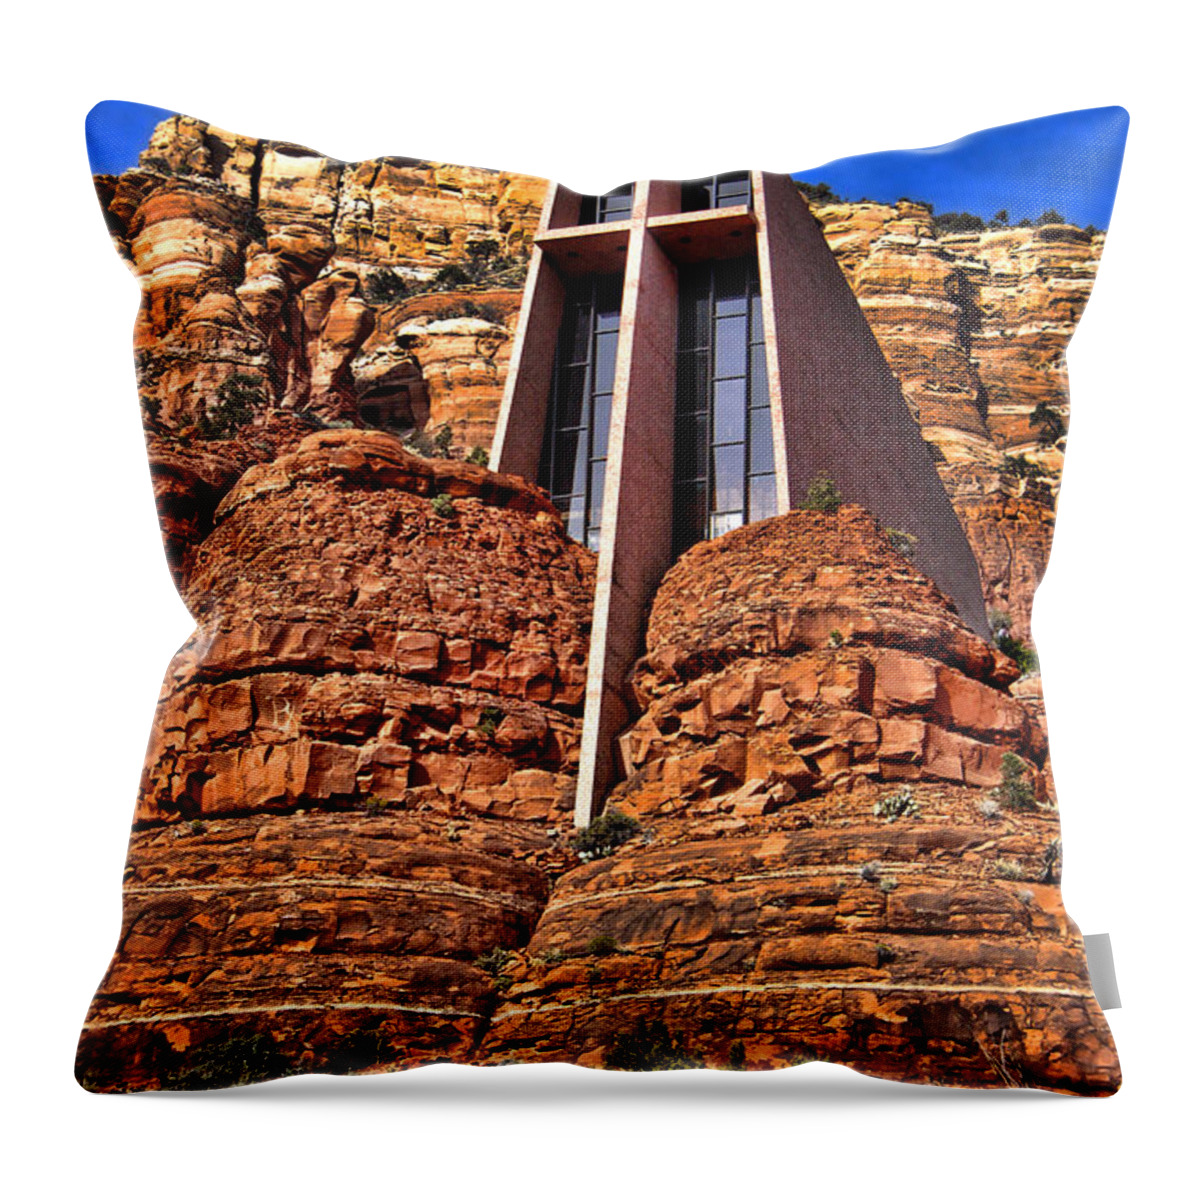 Sedona Arizona Throw Pillow featuring the photograph Chapel of the Holy Cross Sedona Arizona by Jon Berghoff